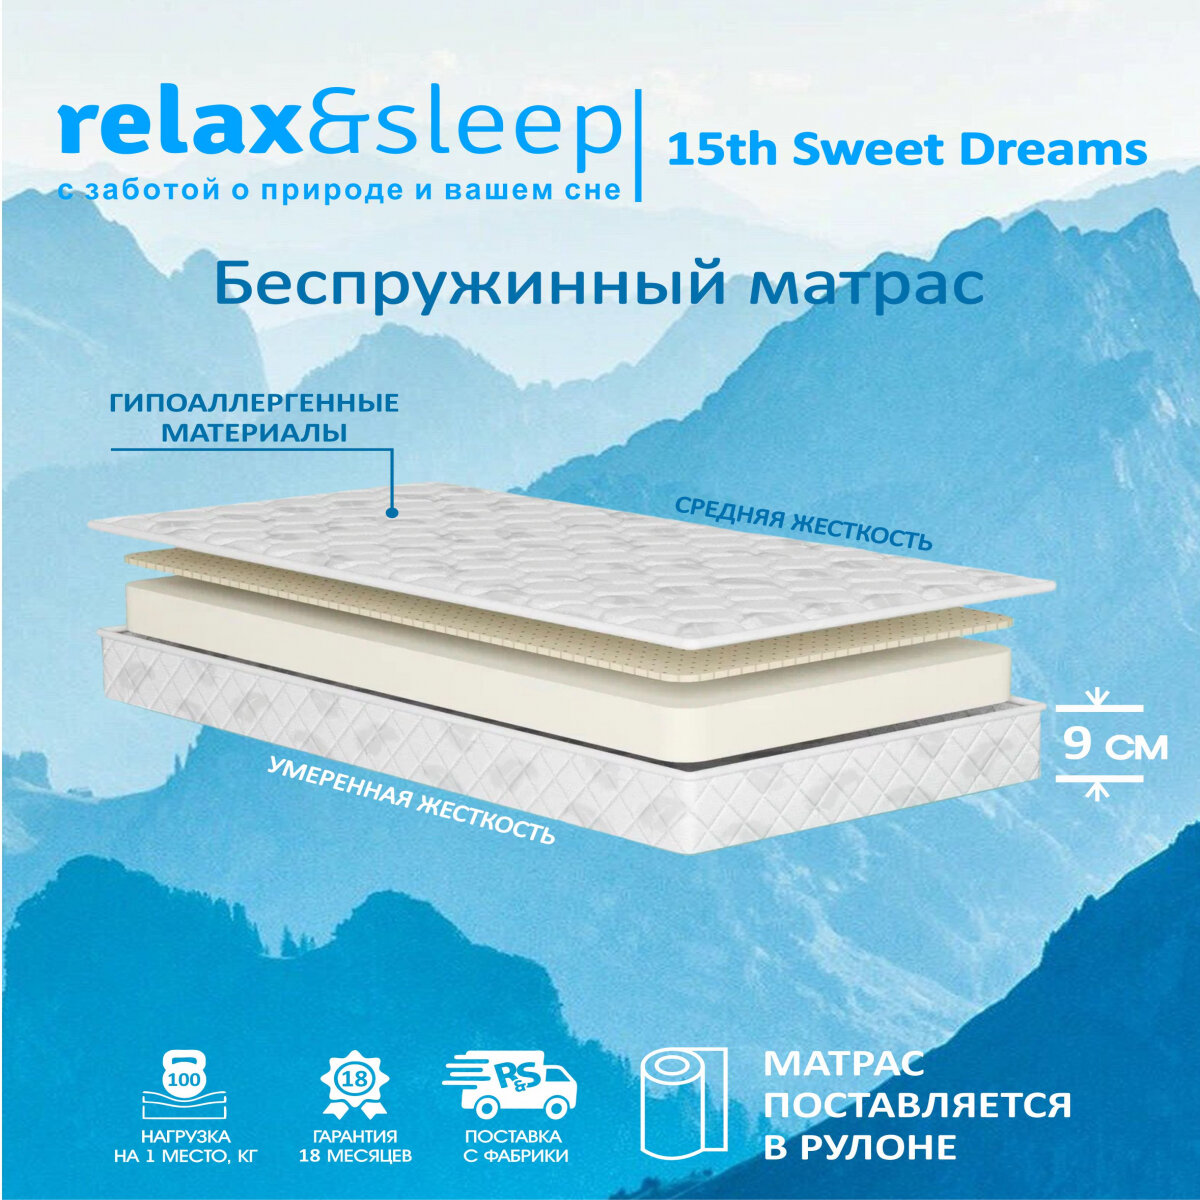 Матрас Relax&Sleep ортопедический беспружинный 15th Sweet Dreams (90 / 170)